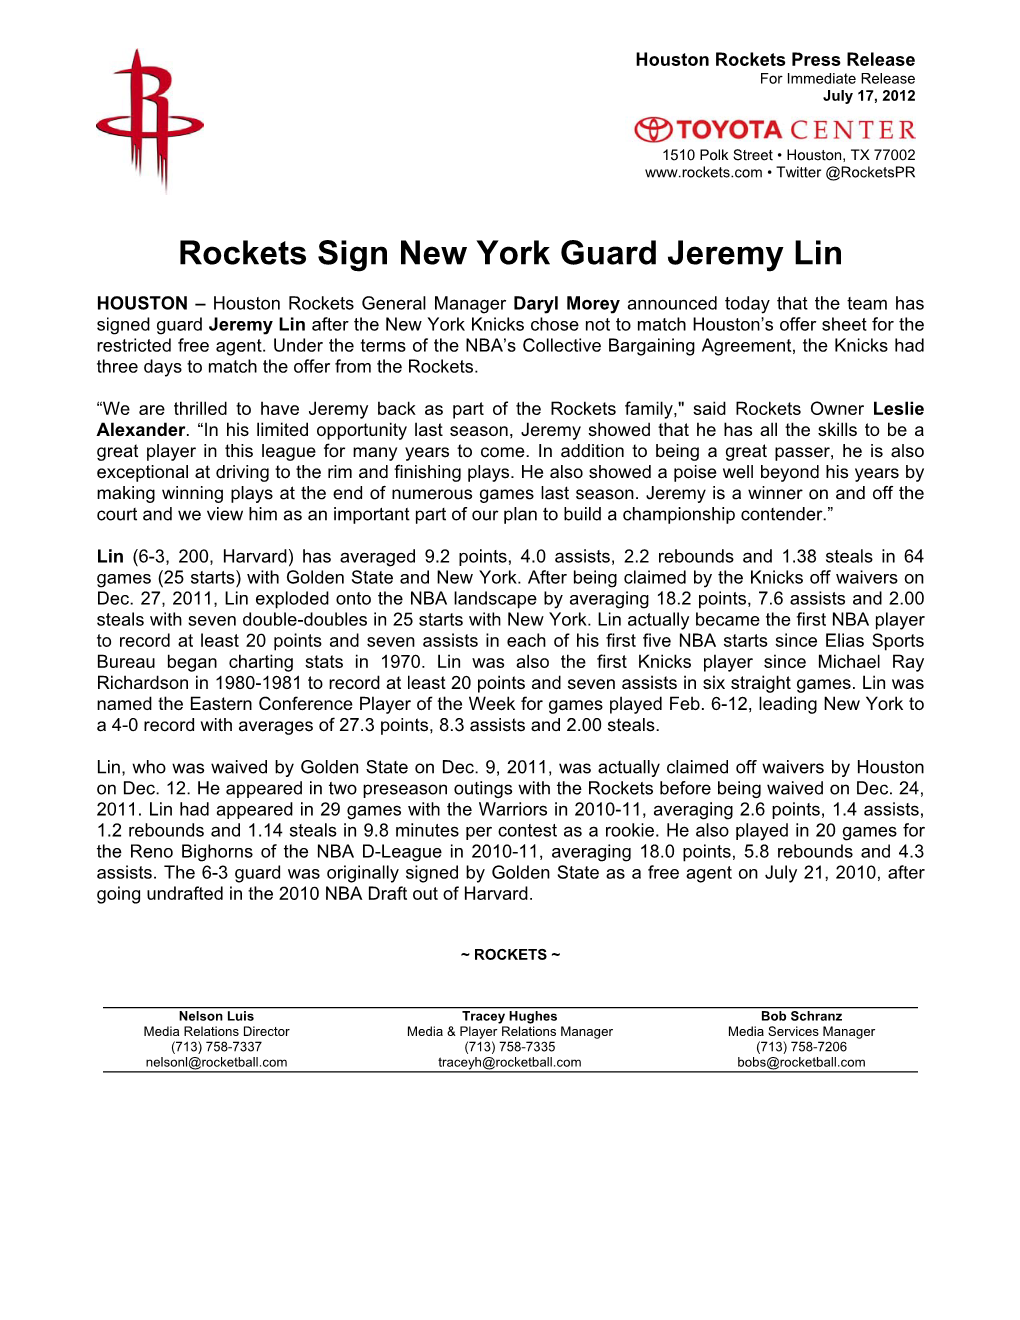 Rockets Sign New York Guard Jeremy Lin